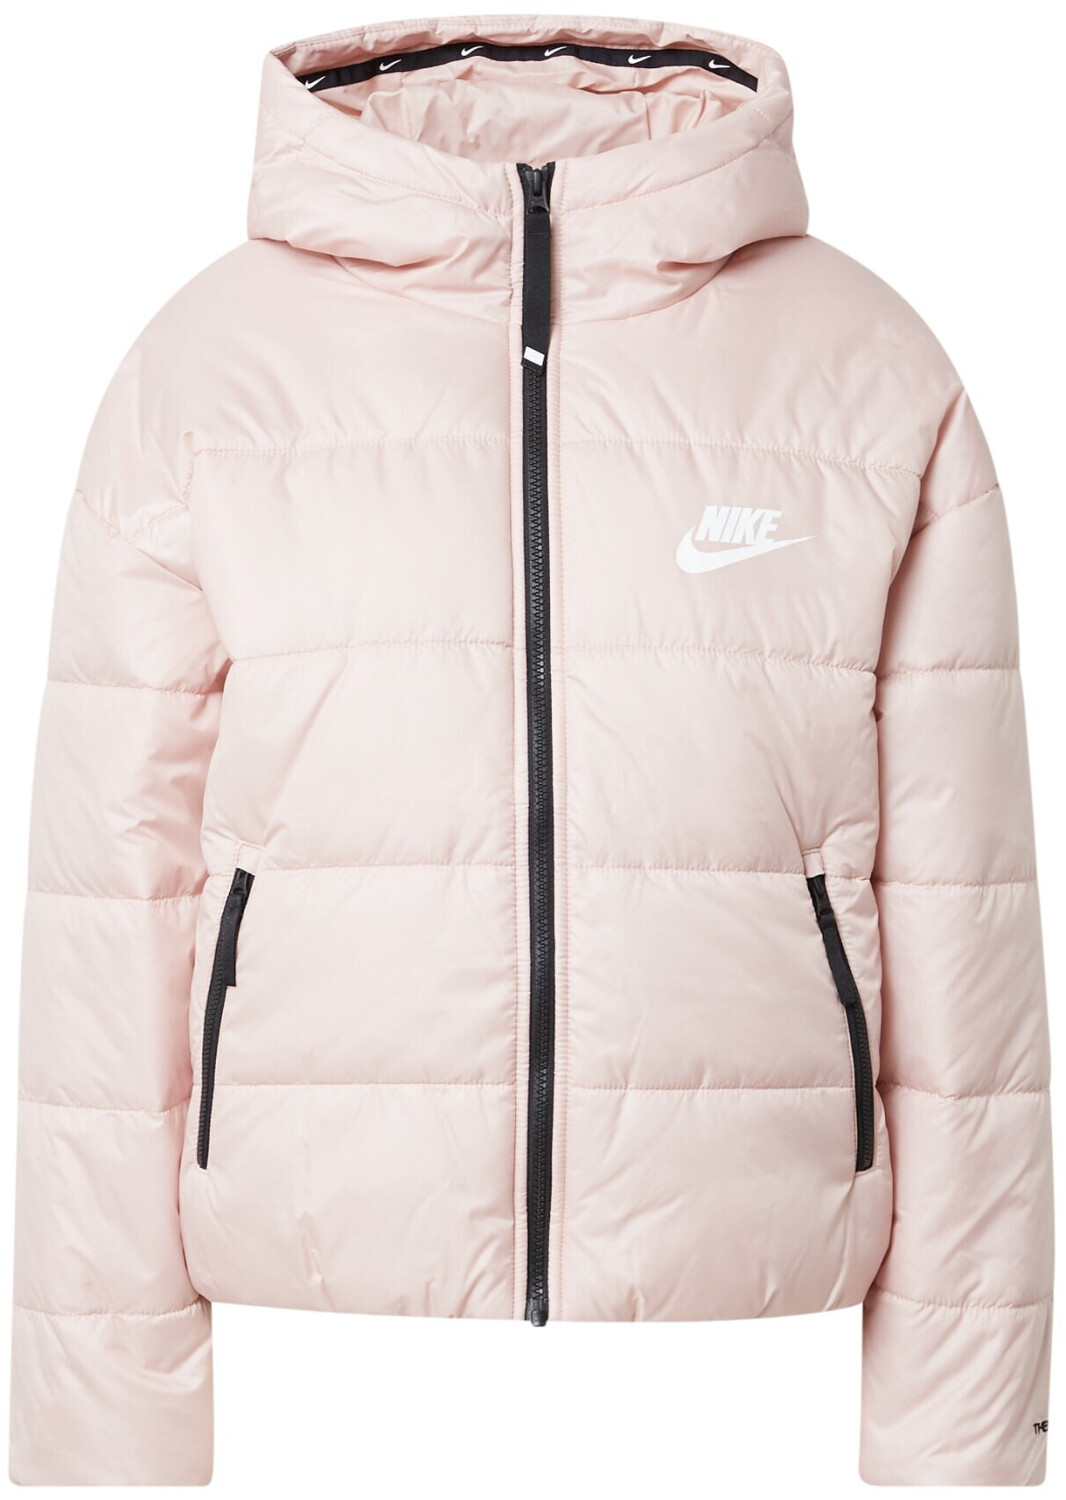 Nike Sportswear Therma-FIT Repel Jacket (DJ6995) pink oxford/black/white